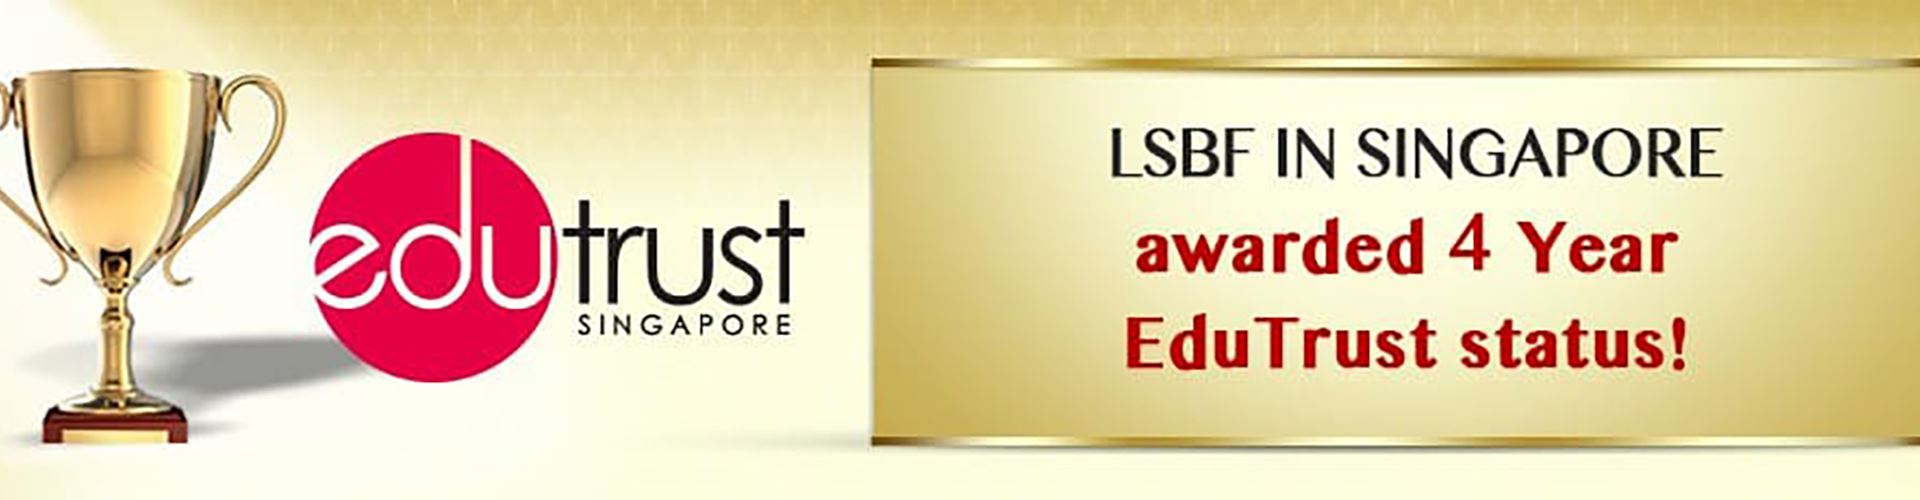 LSBF in Singapore awarded the 4 Year Edutrust status